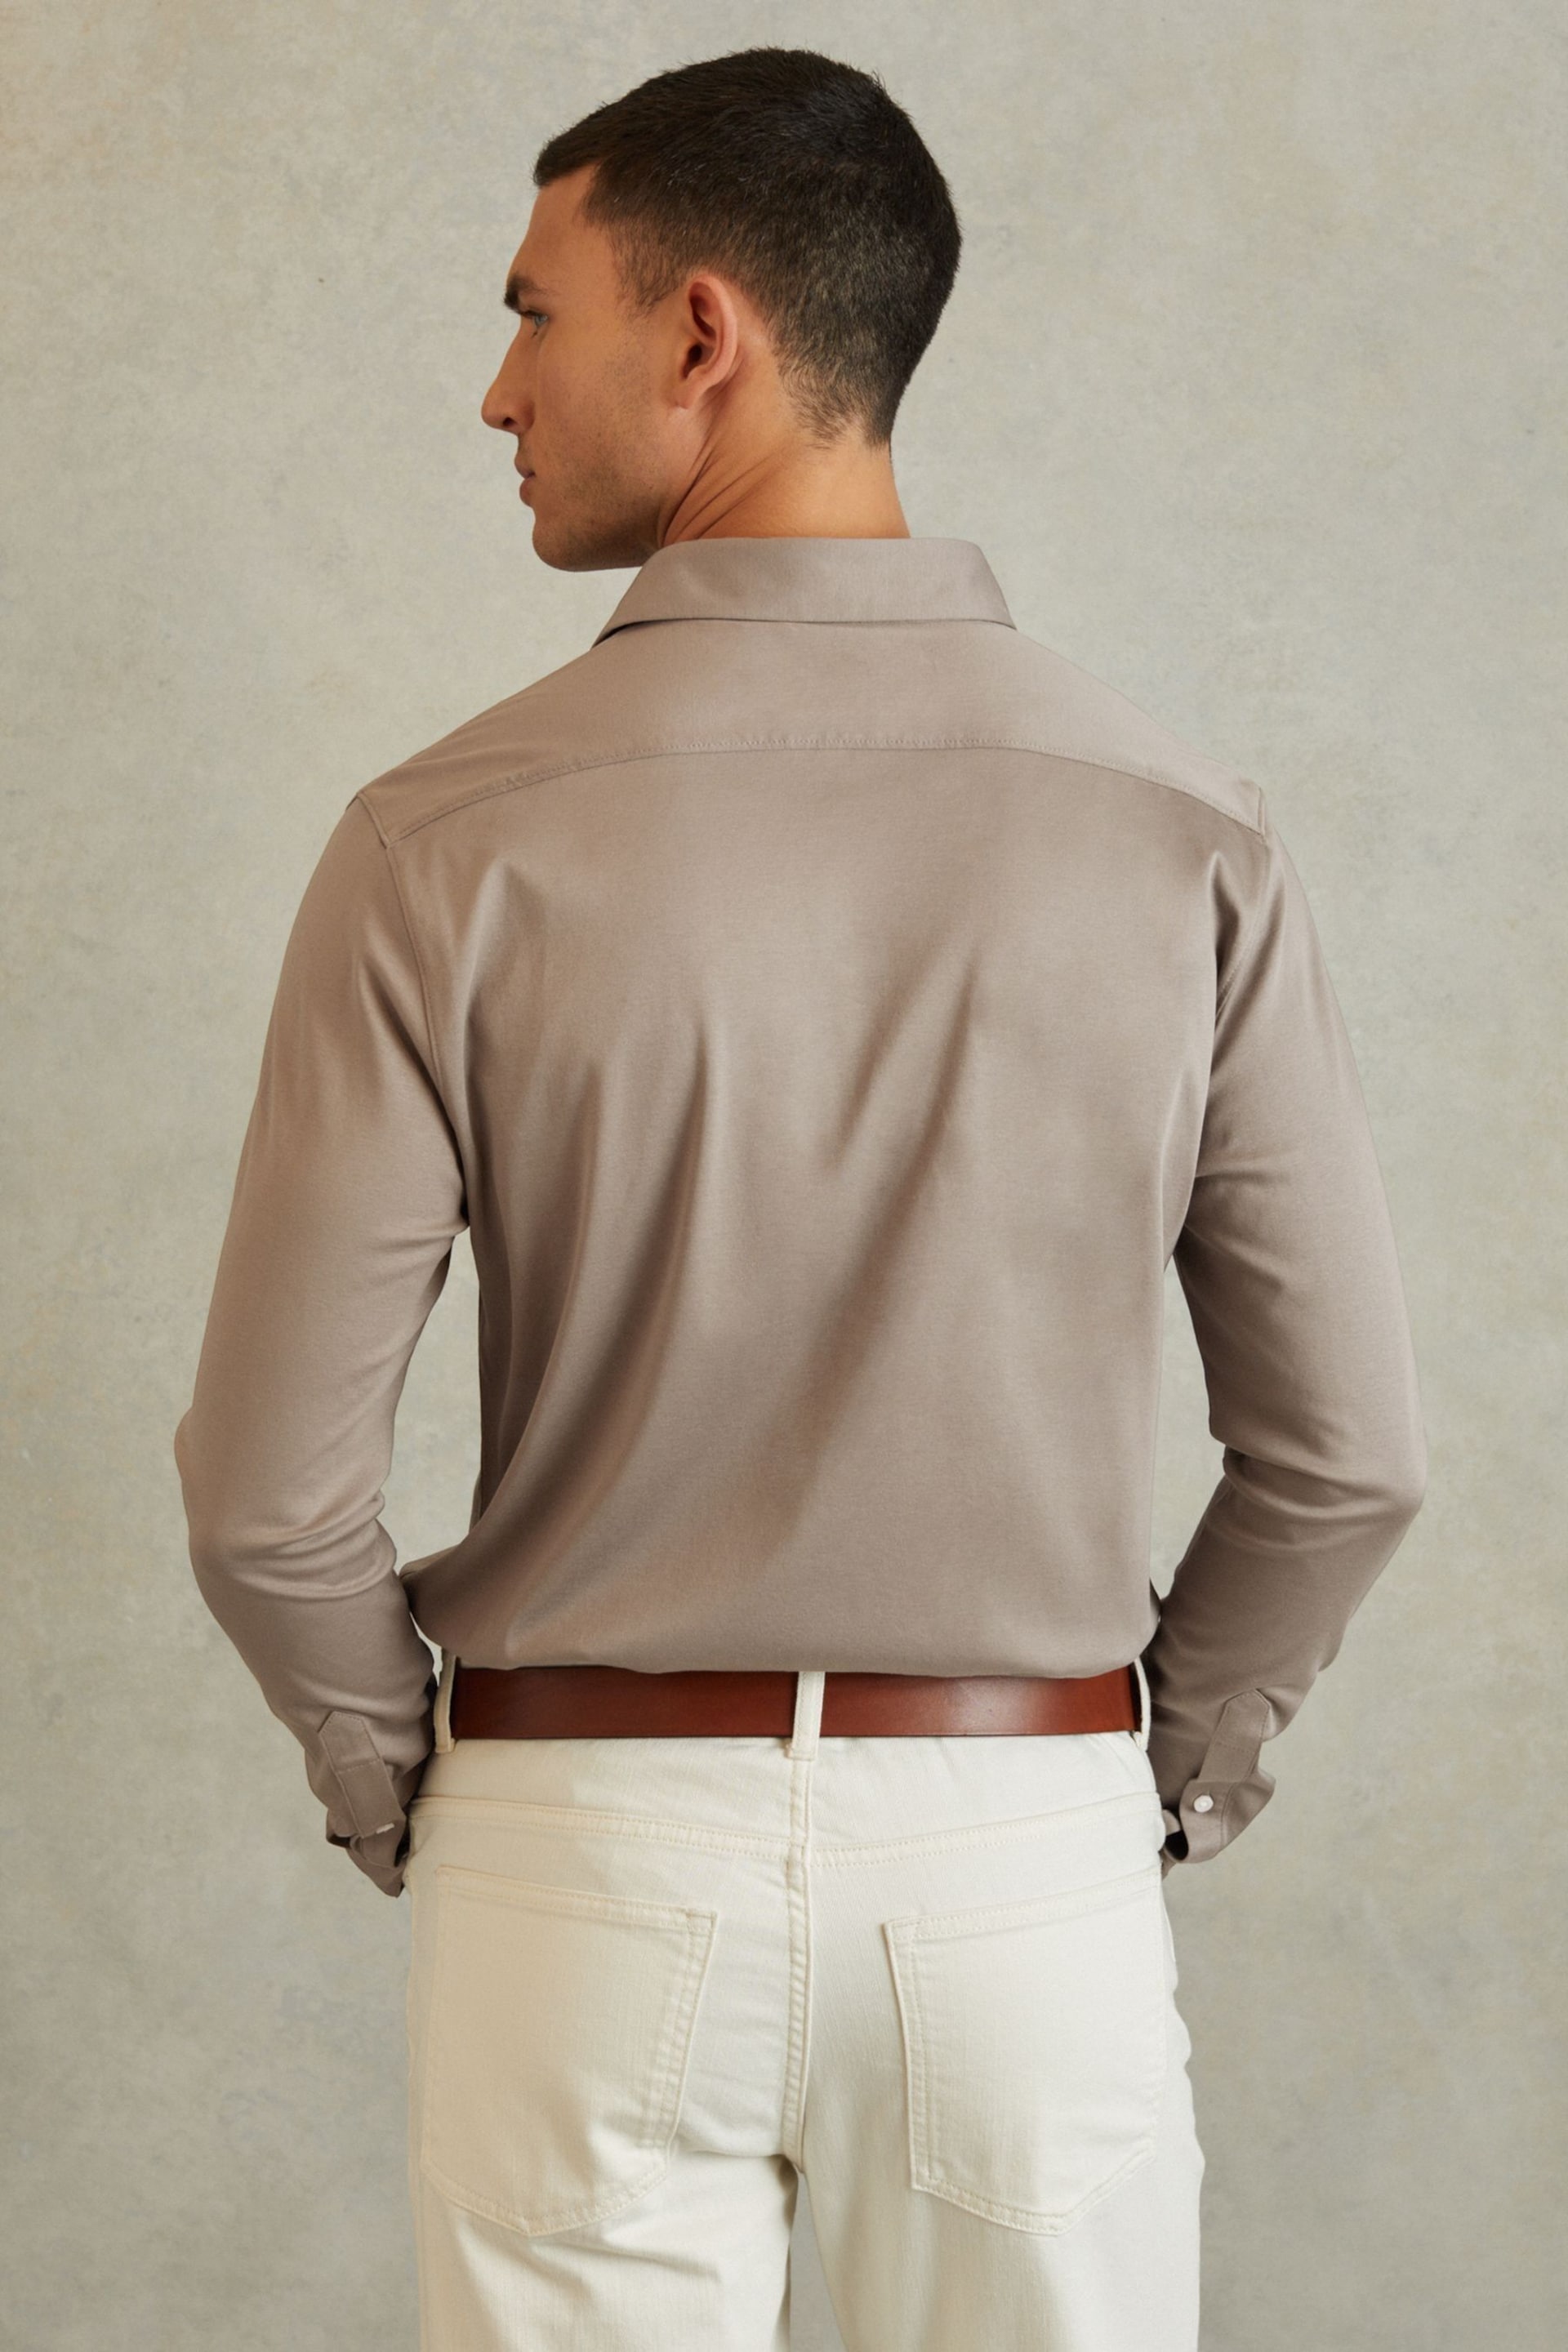 Reiss Cinder Viscount Mercerised Cotton Jersey Shirt - Image 4 of 5